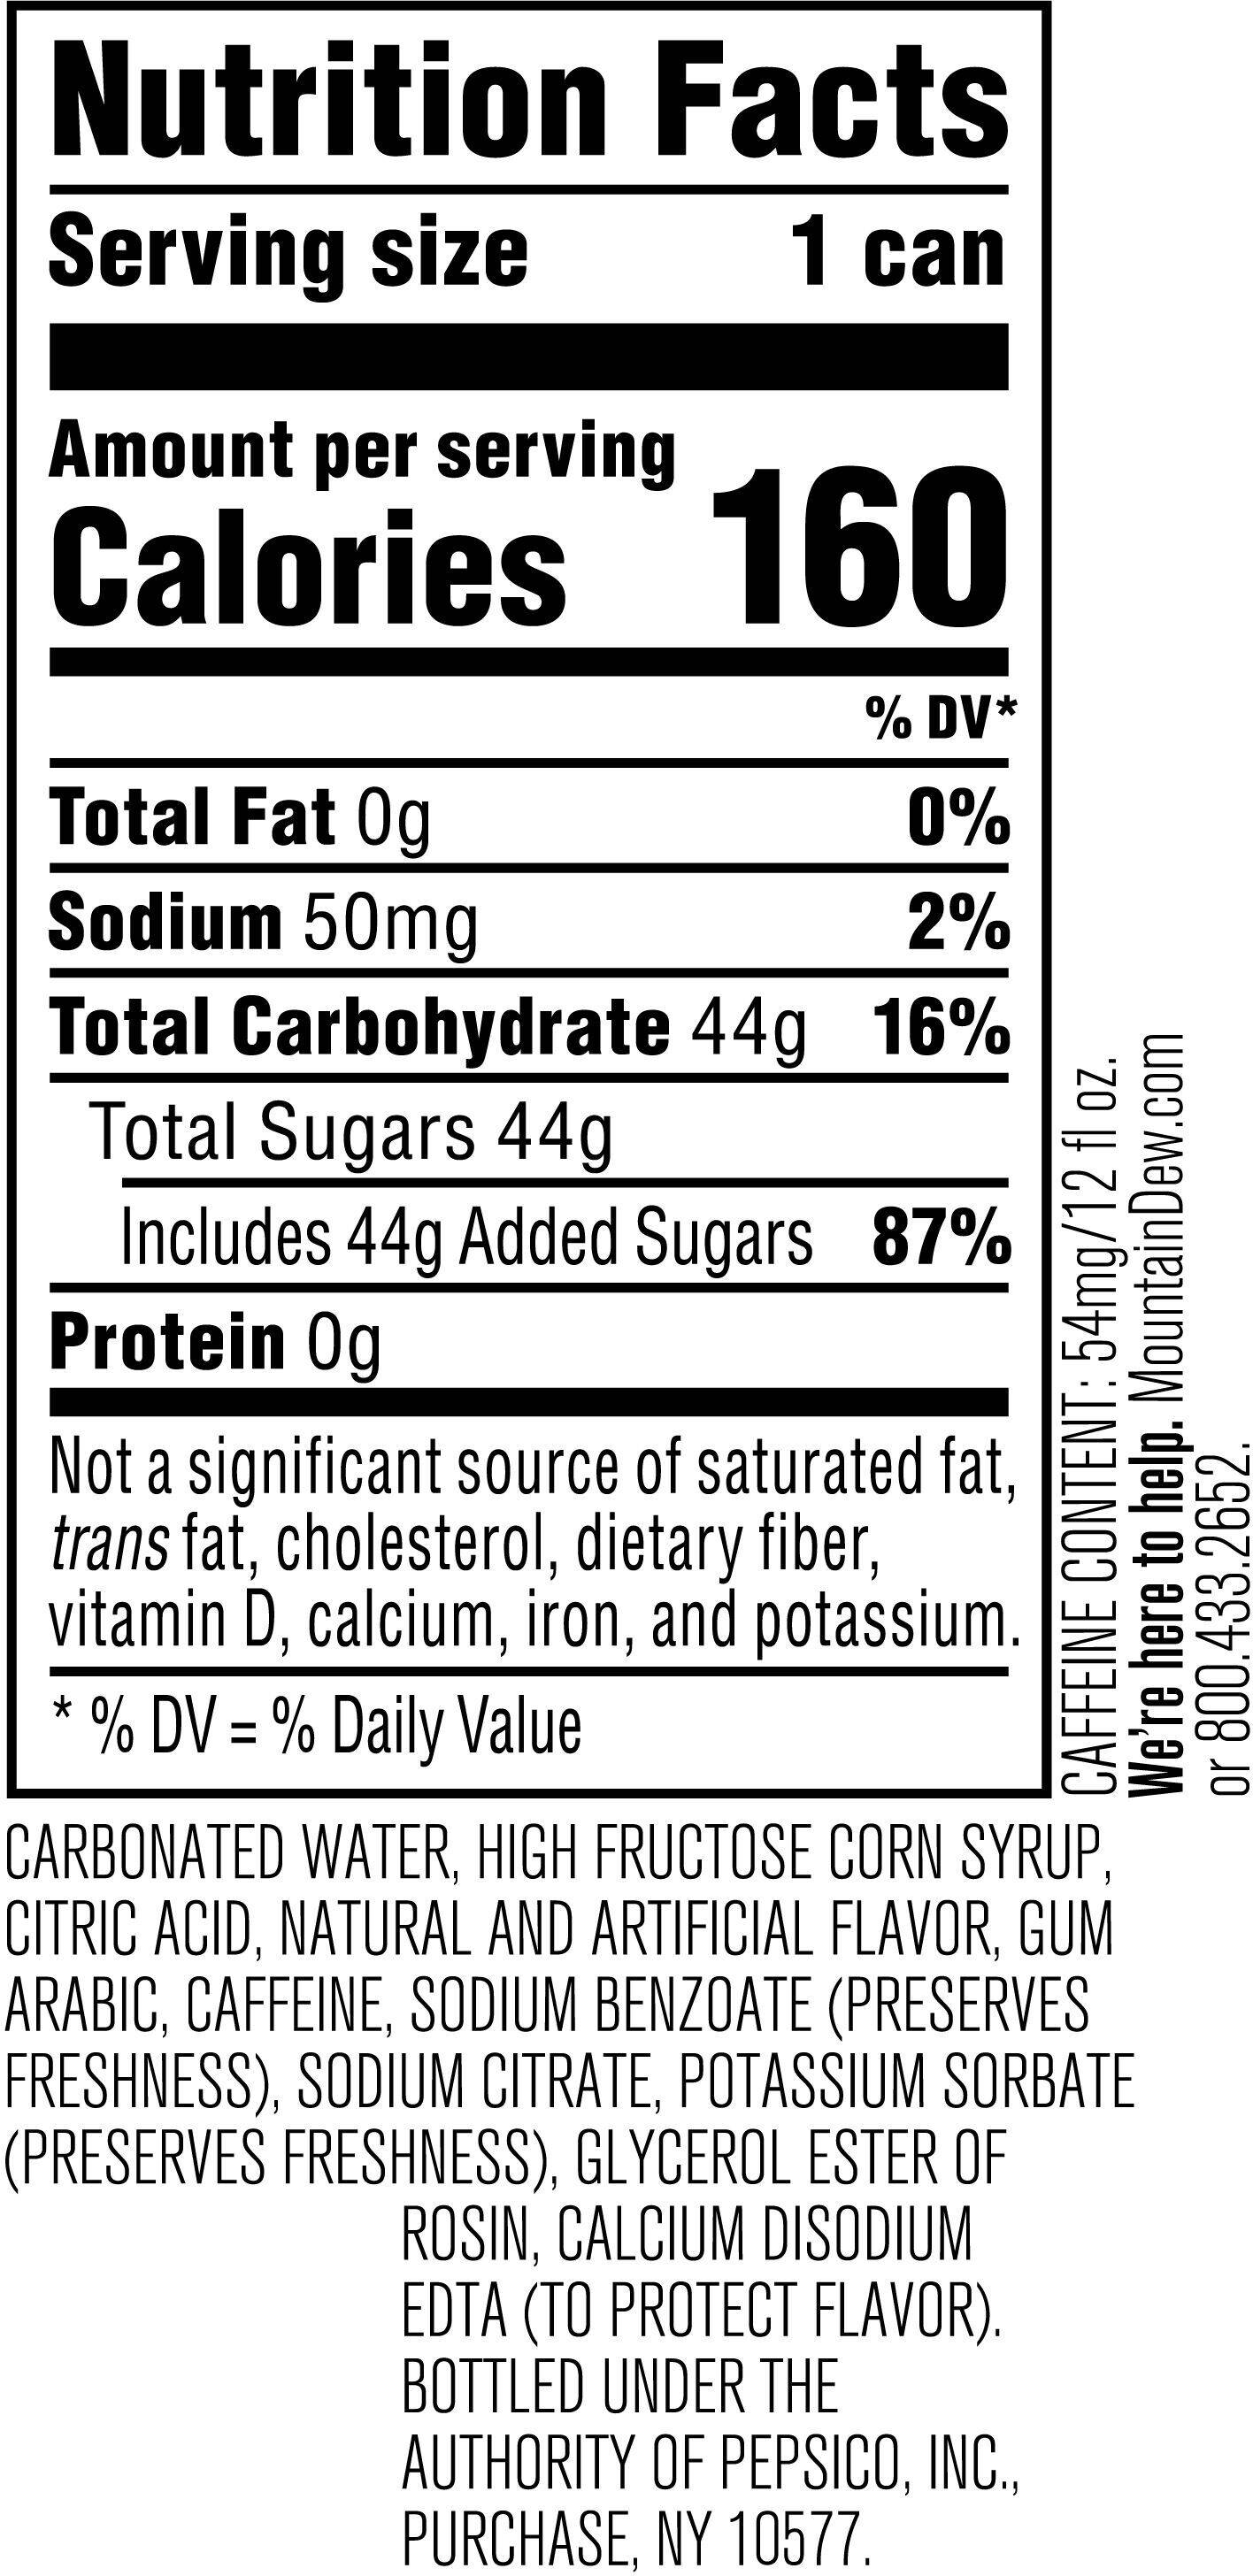 Image describing nutrition information for product Mtn Dew Voo Dew